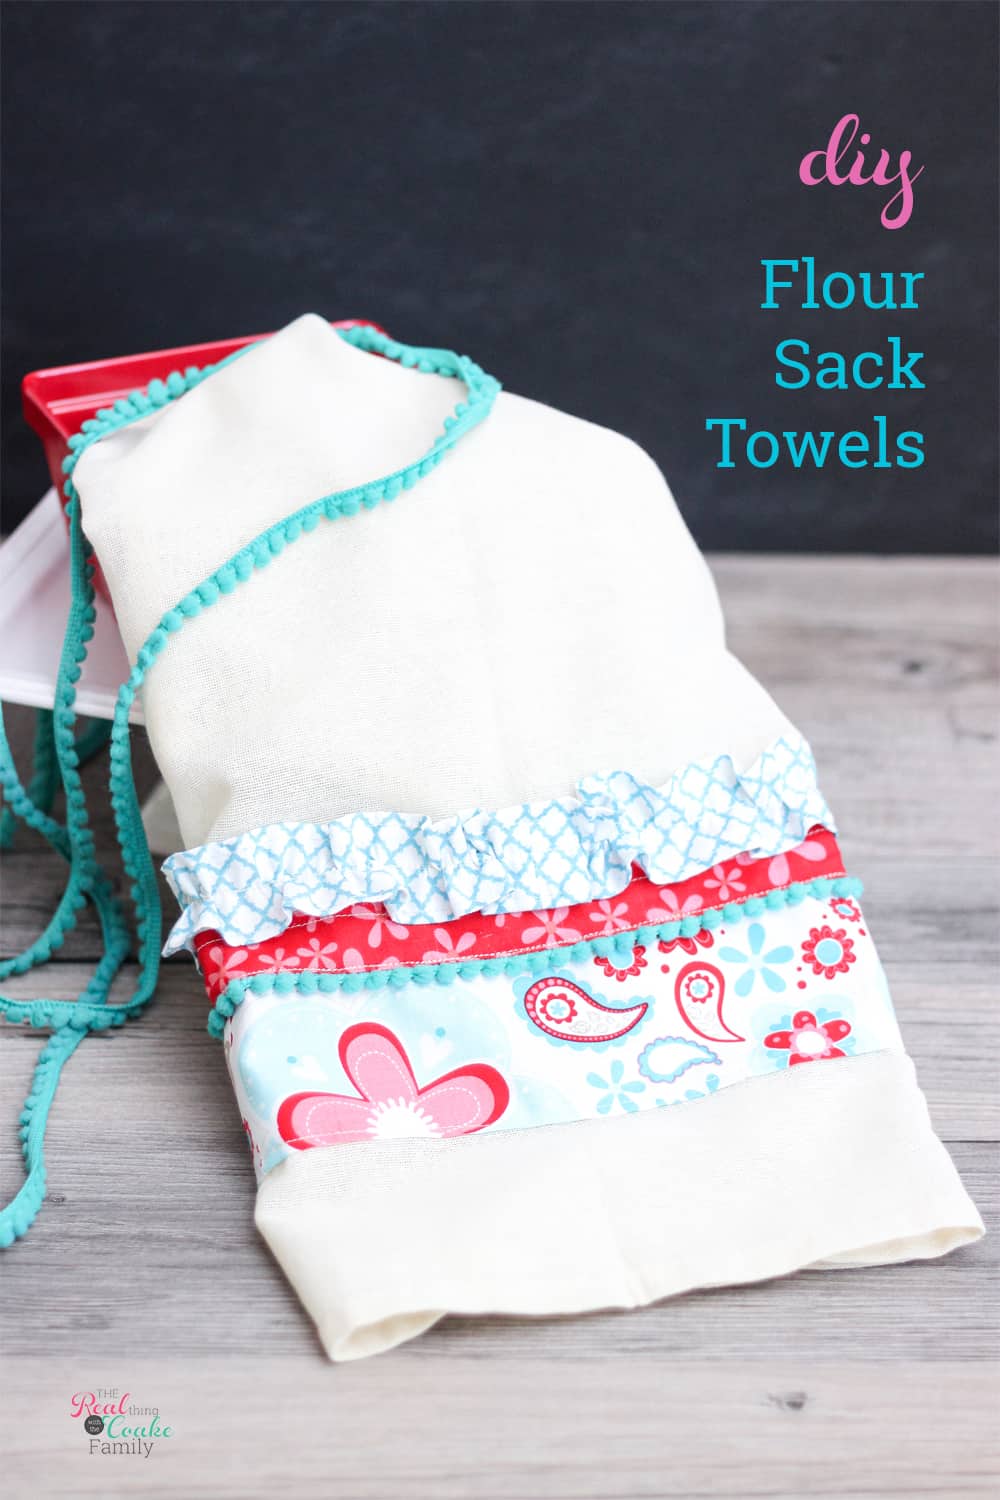 https://realcreativerealorganized.com/wp-content/uploads/2014/08/Flour-Sack-Towels-13.jpg